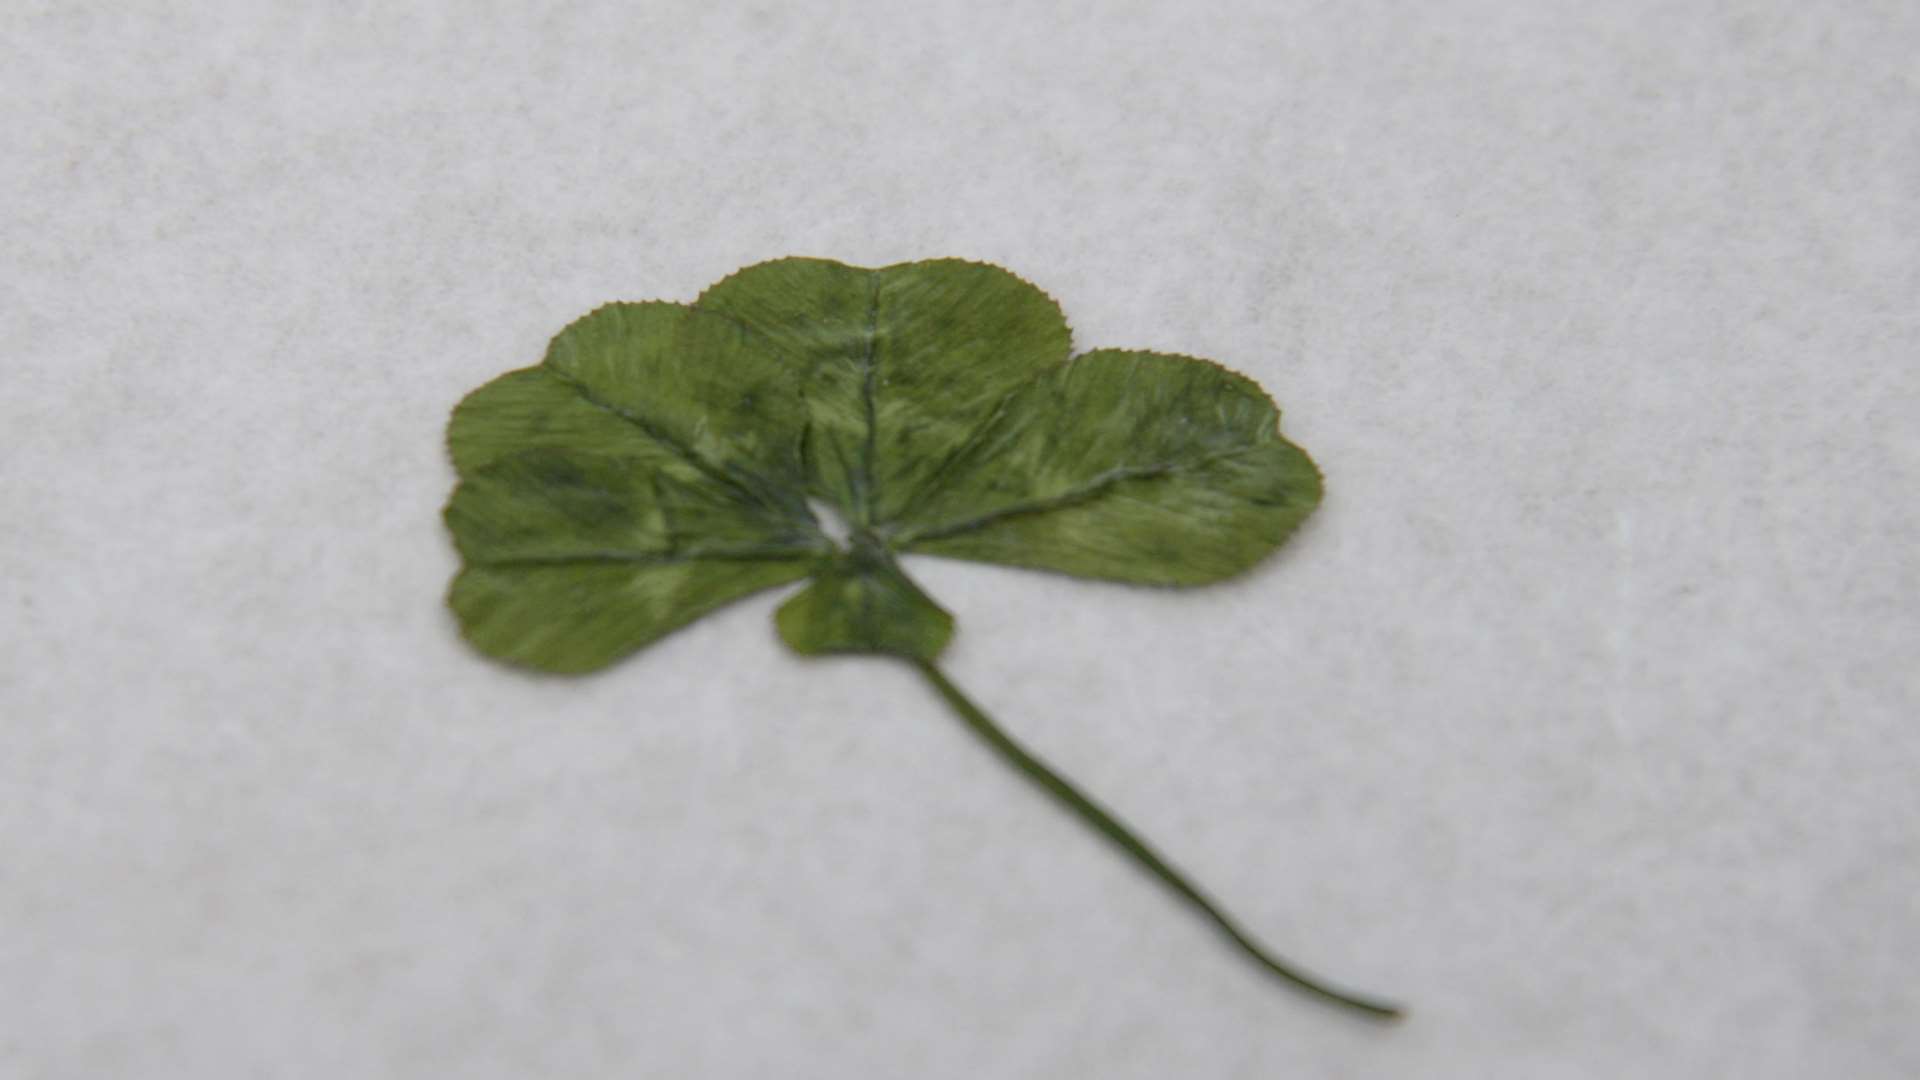 The five-leaf clover was found in Lenham Heath. Picture: Chris Davey